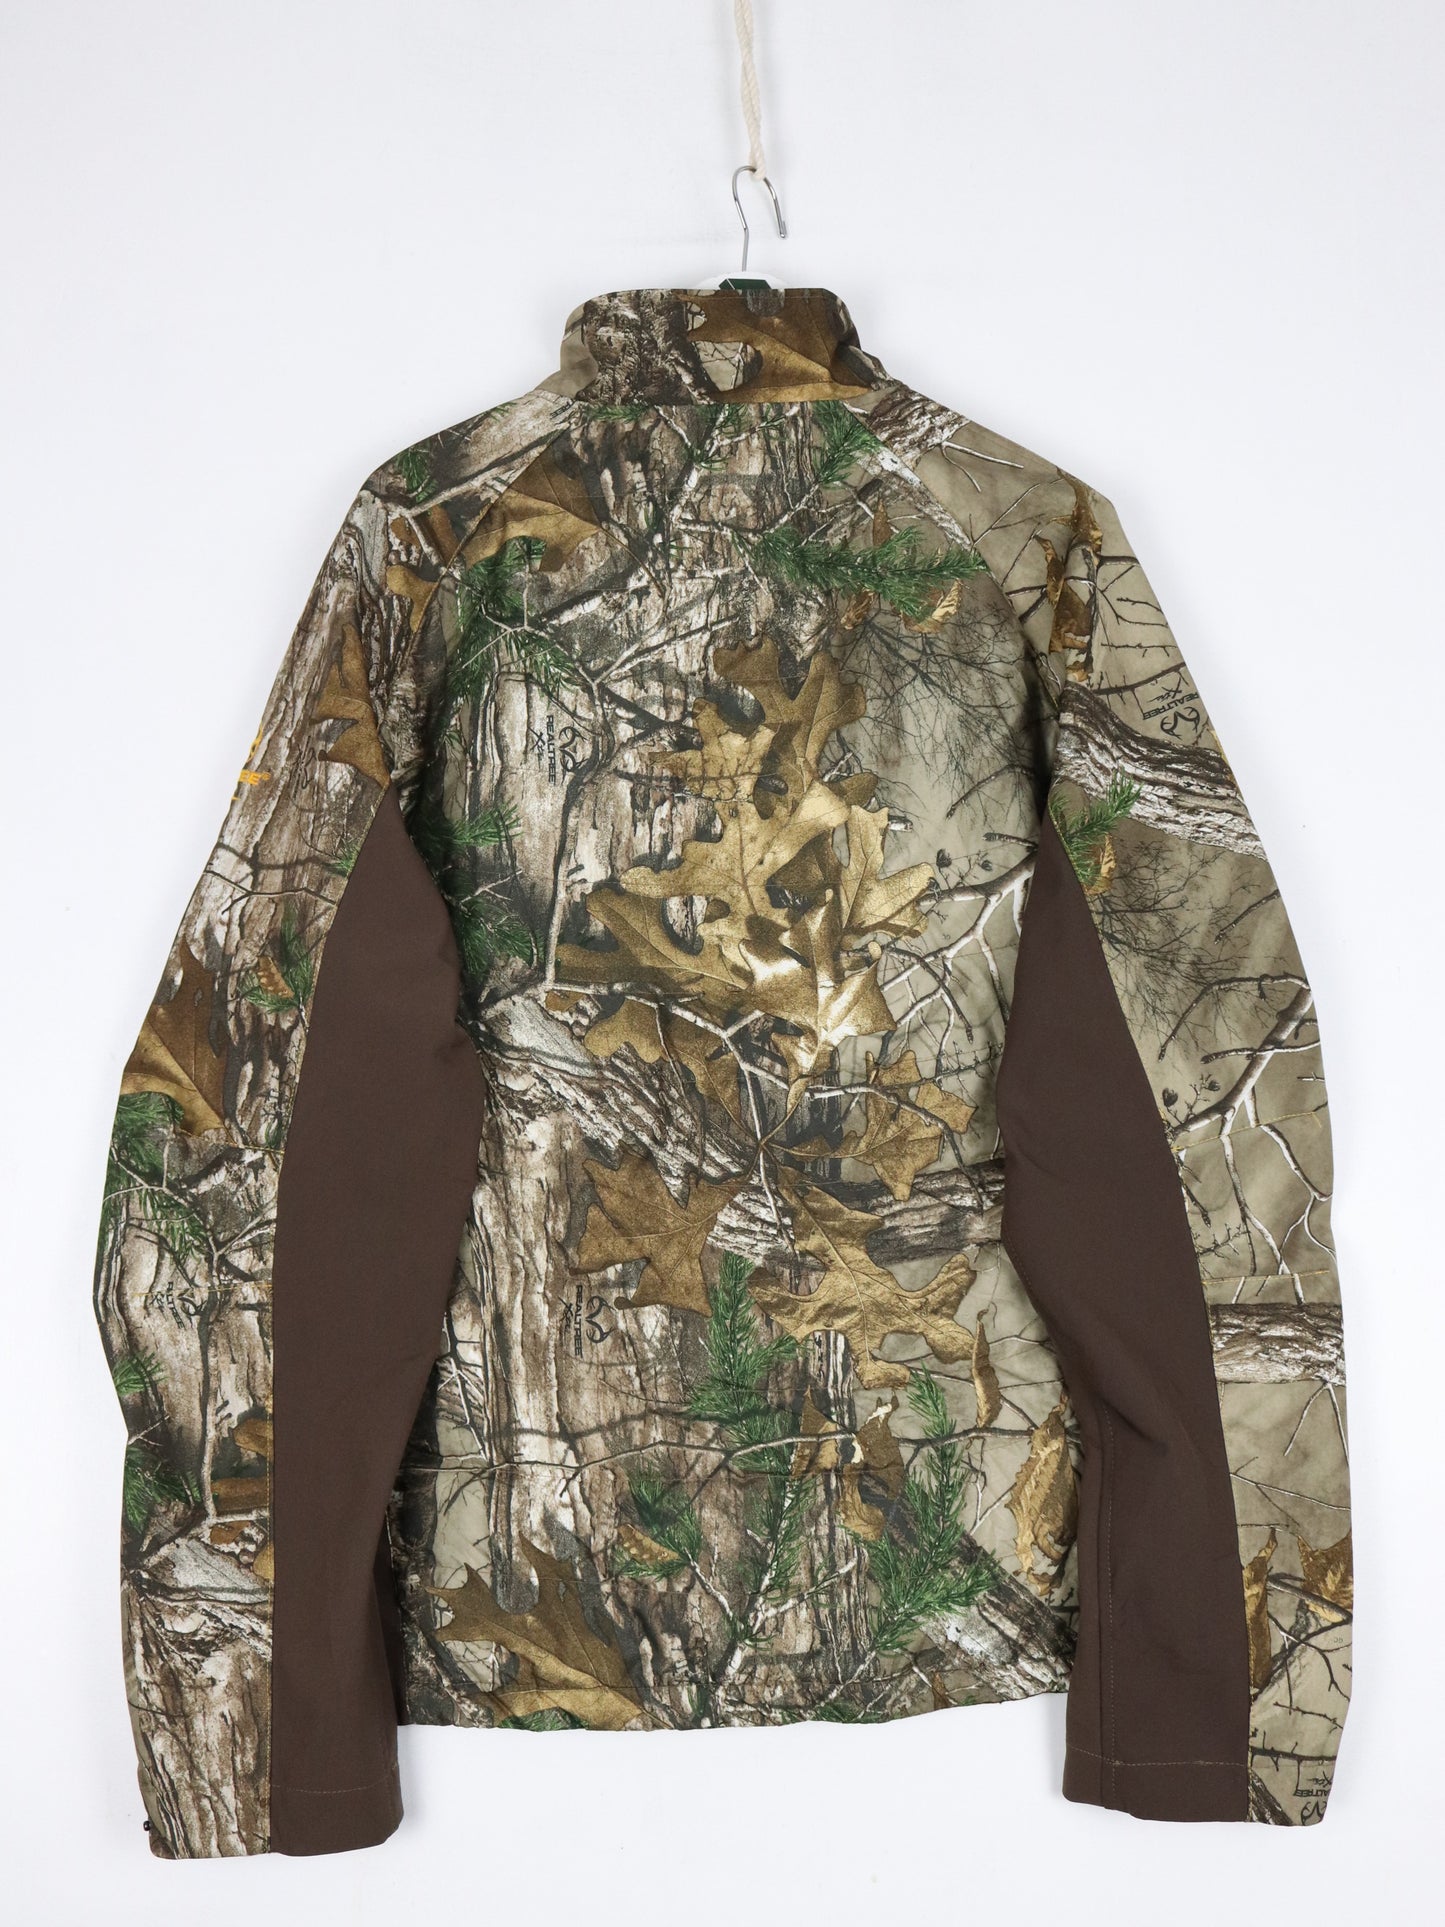 Real Tree Jacket Mens Large Brown Camo Hunting Outdoors Coat